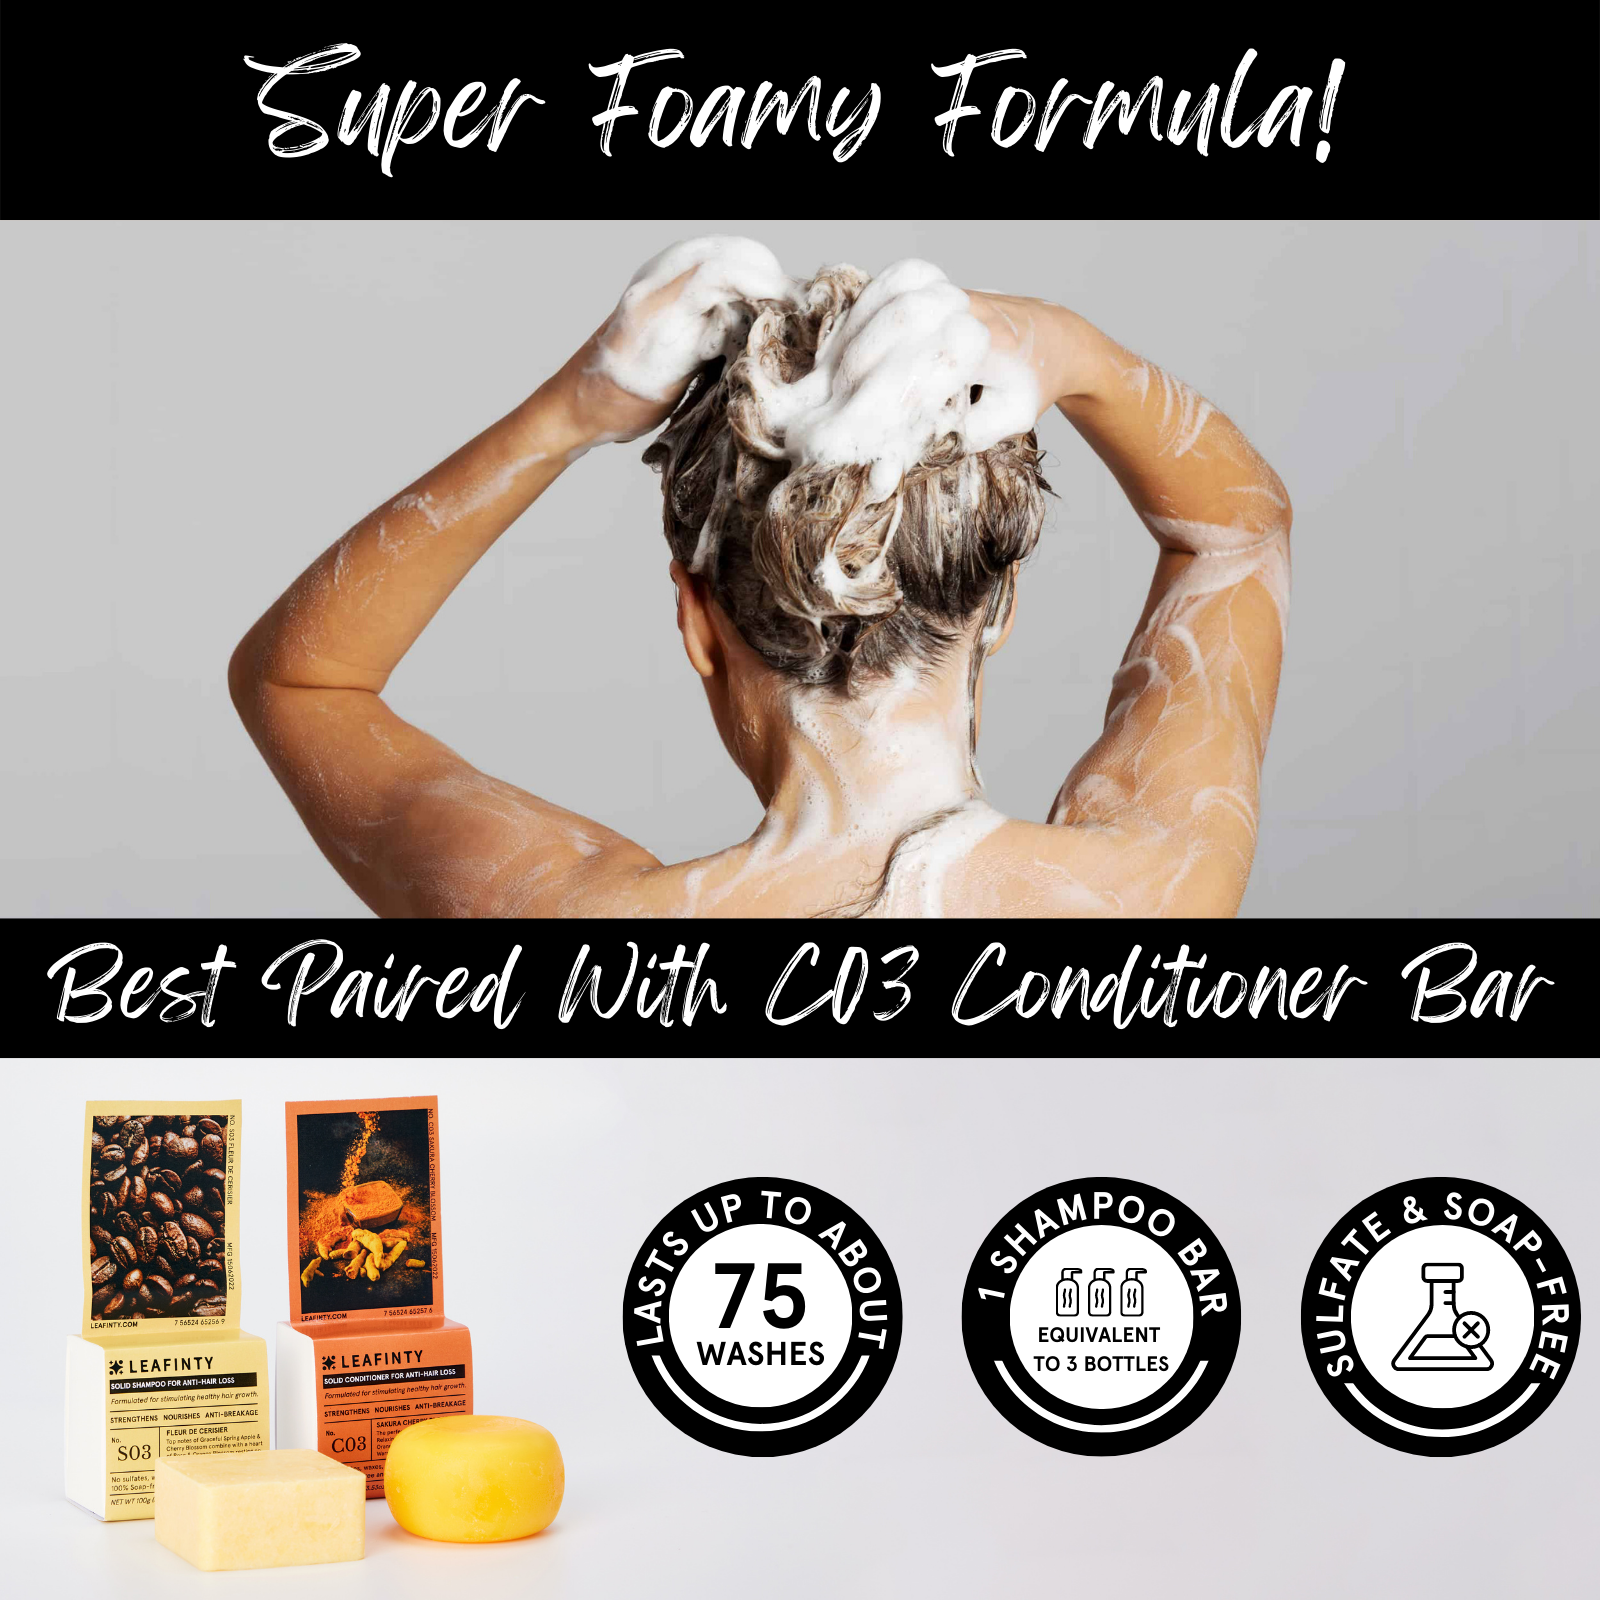 S03 Solid Shampoo Bar for Stimulating Hair Growth & Healthier Hair